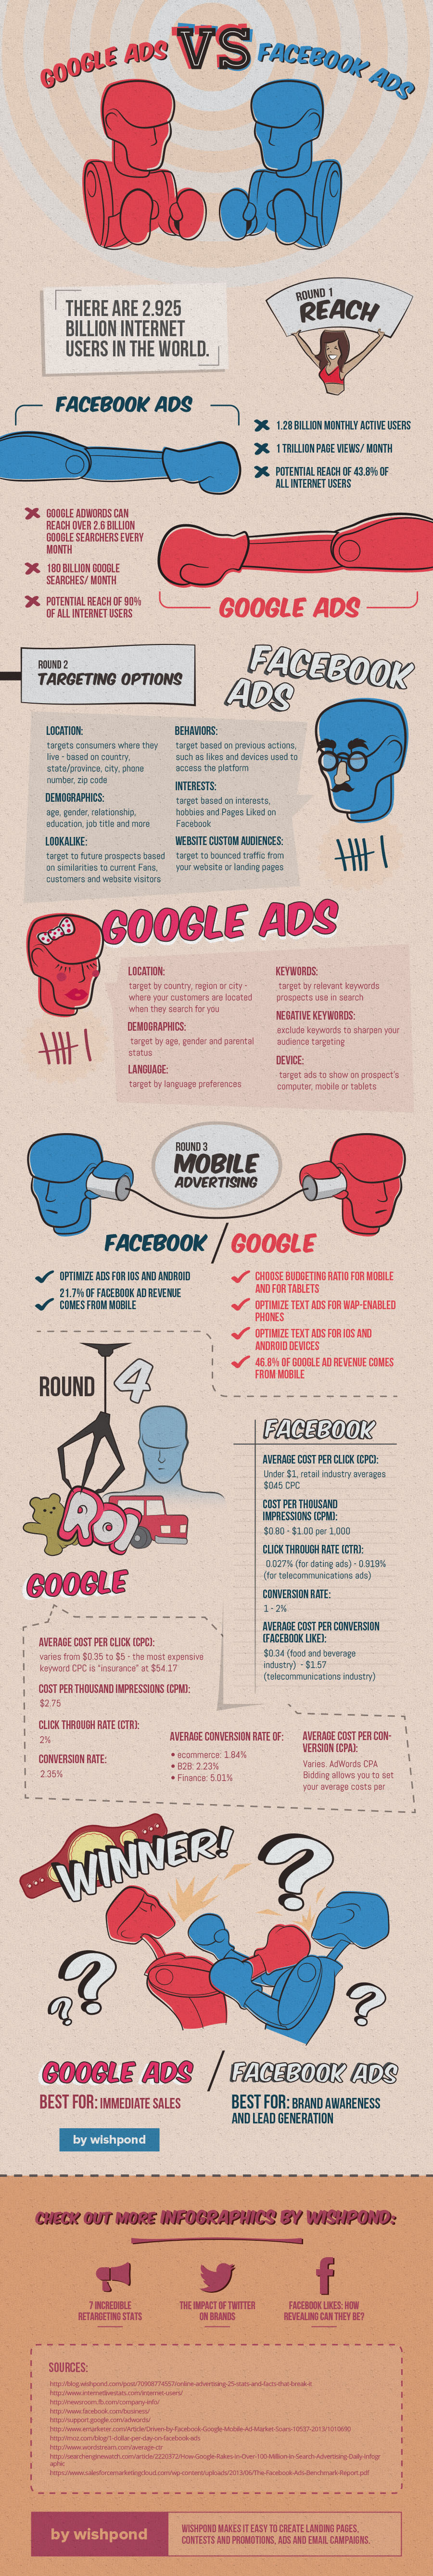 Advertise online Google vs Facebook